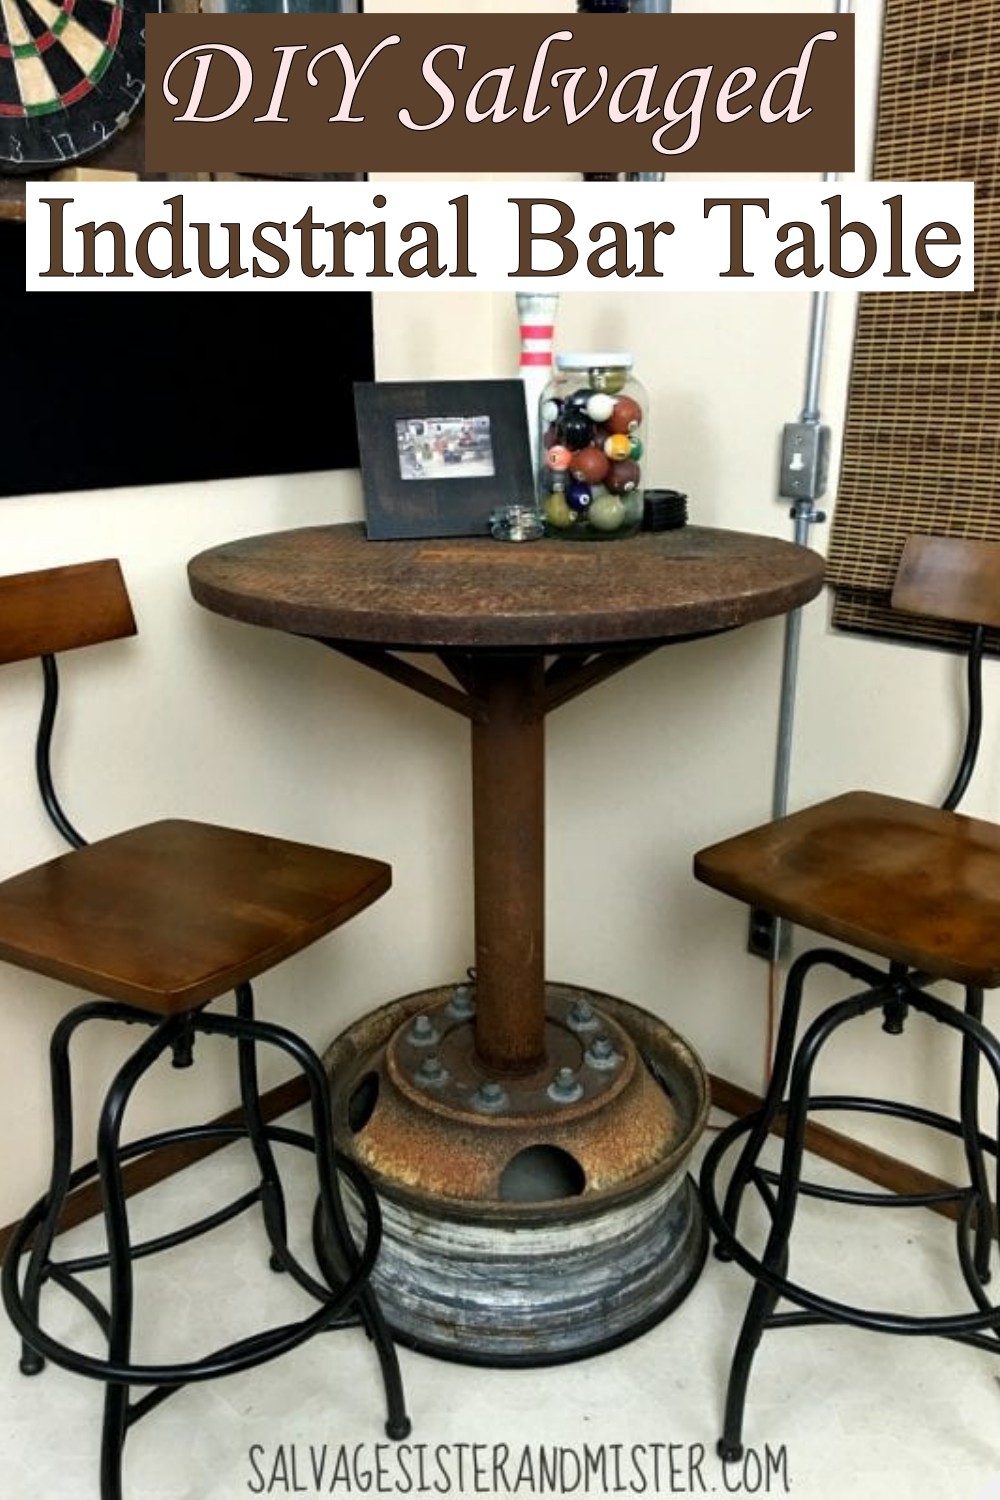 DIY Salvaged Industrial Bar Table